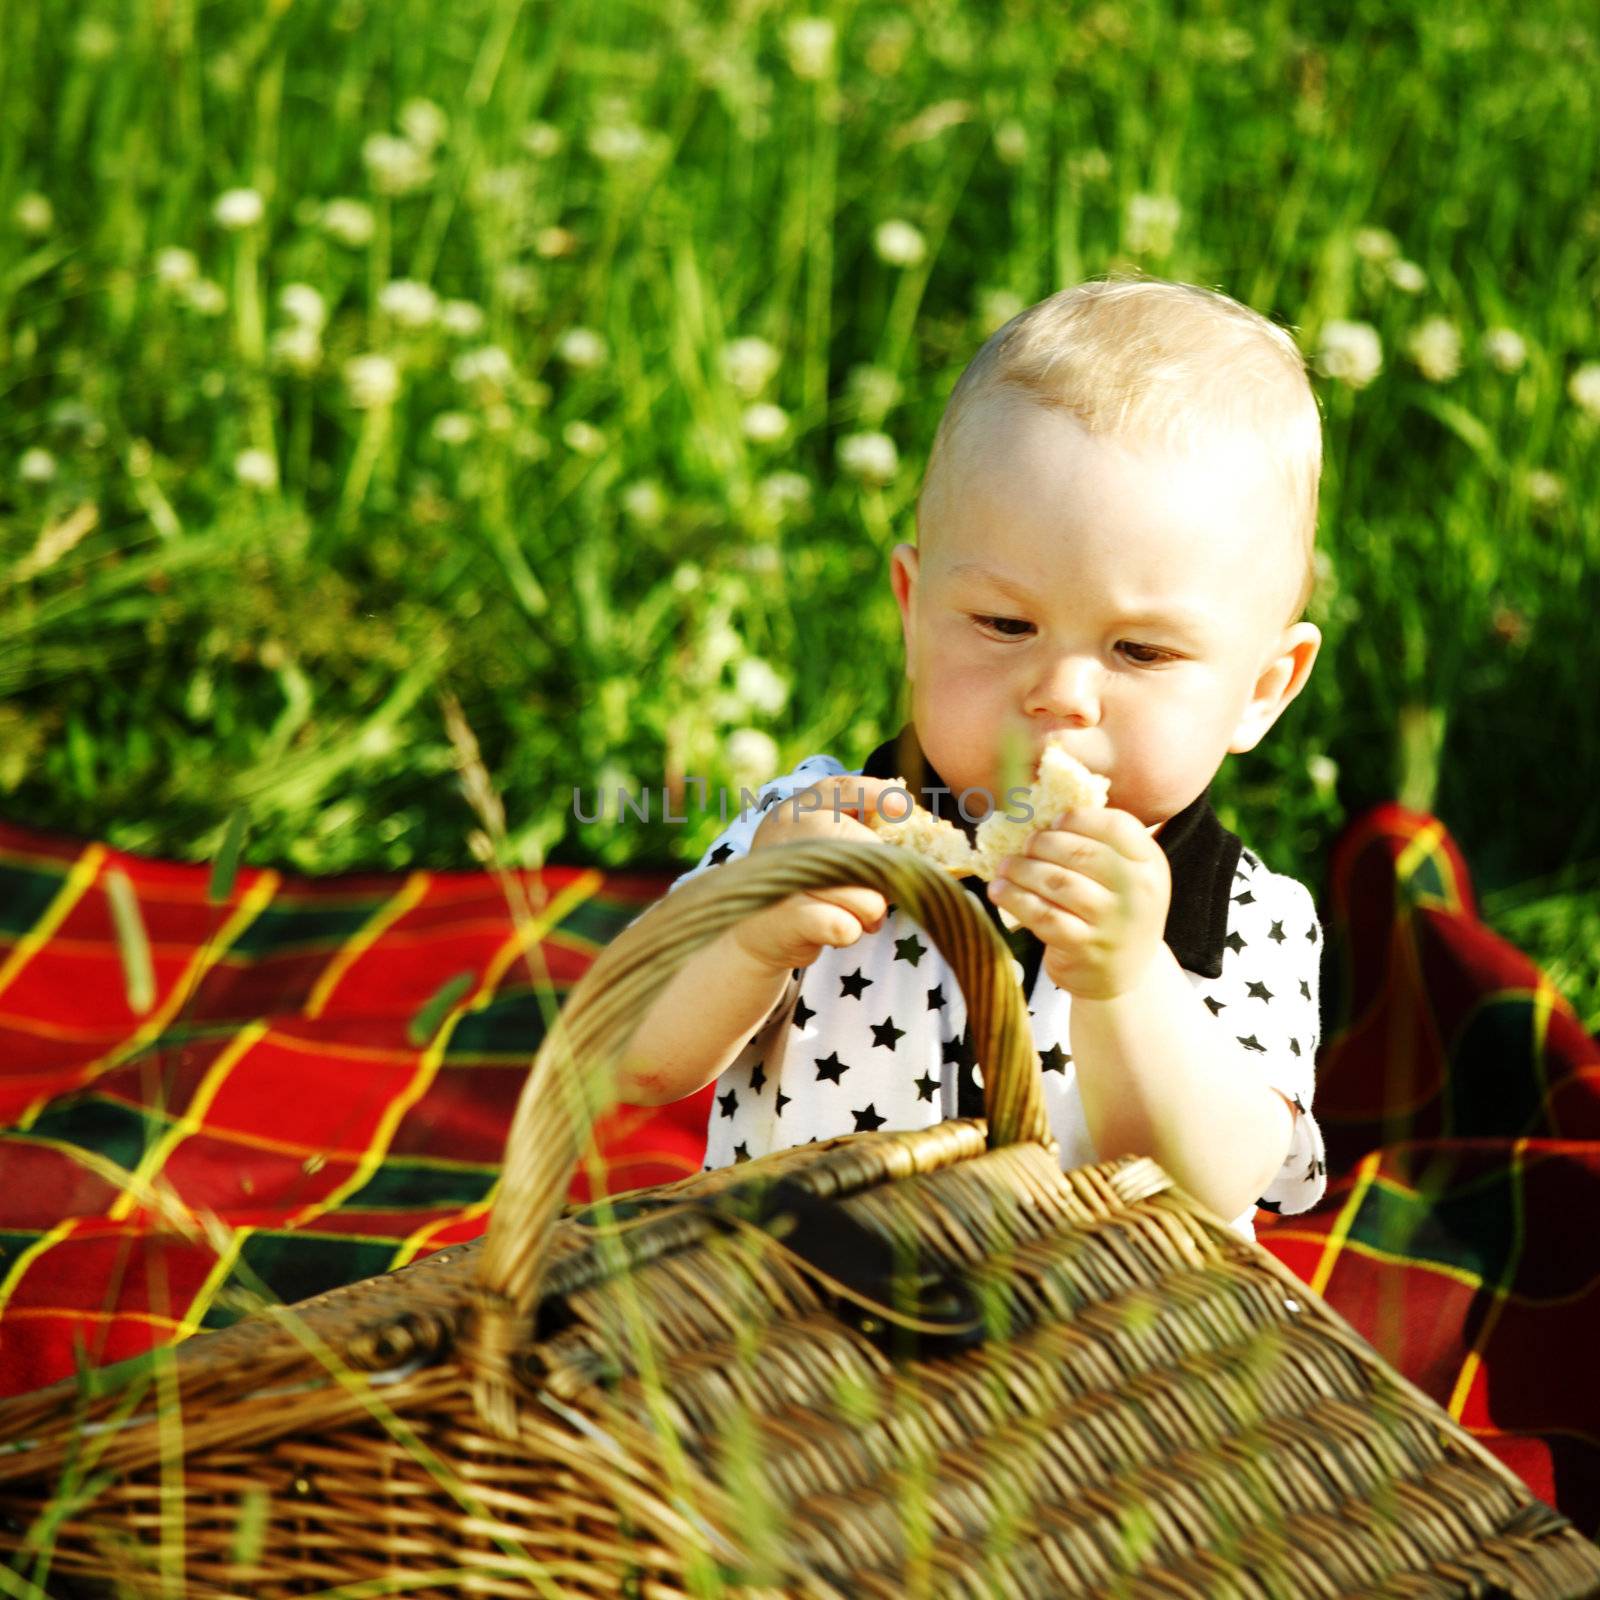  boy on picnic by Yellowj